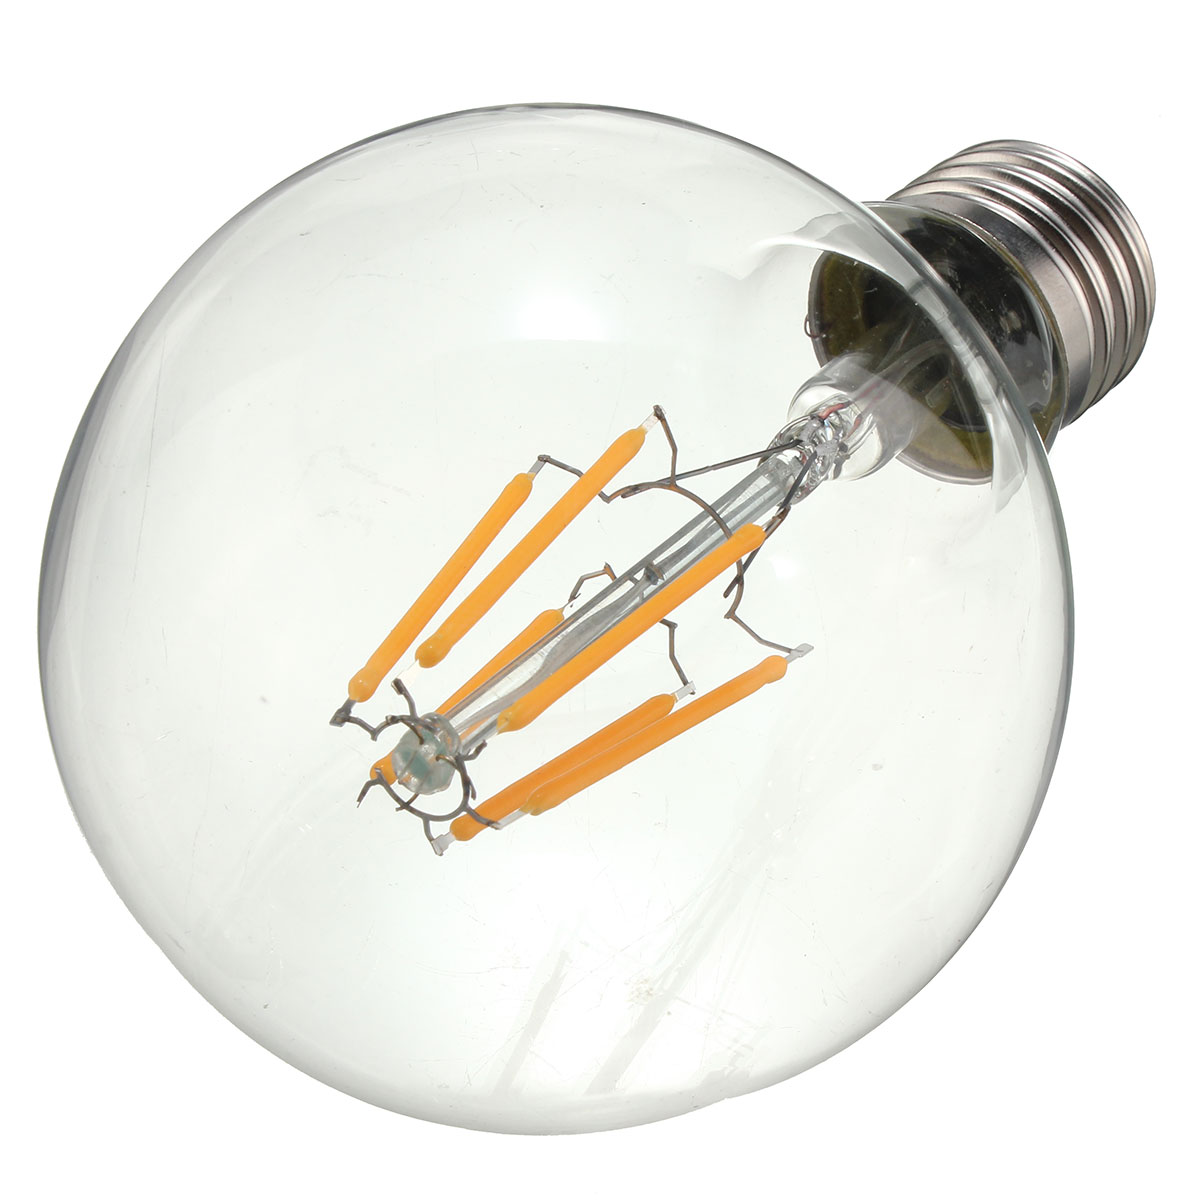 Dimmable-G80-E27-6W-COB-Warm-White-600Lumens-Retro-Vintage-Light-Lamp-Bulb-AC110V-AC220V-1074483-6